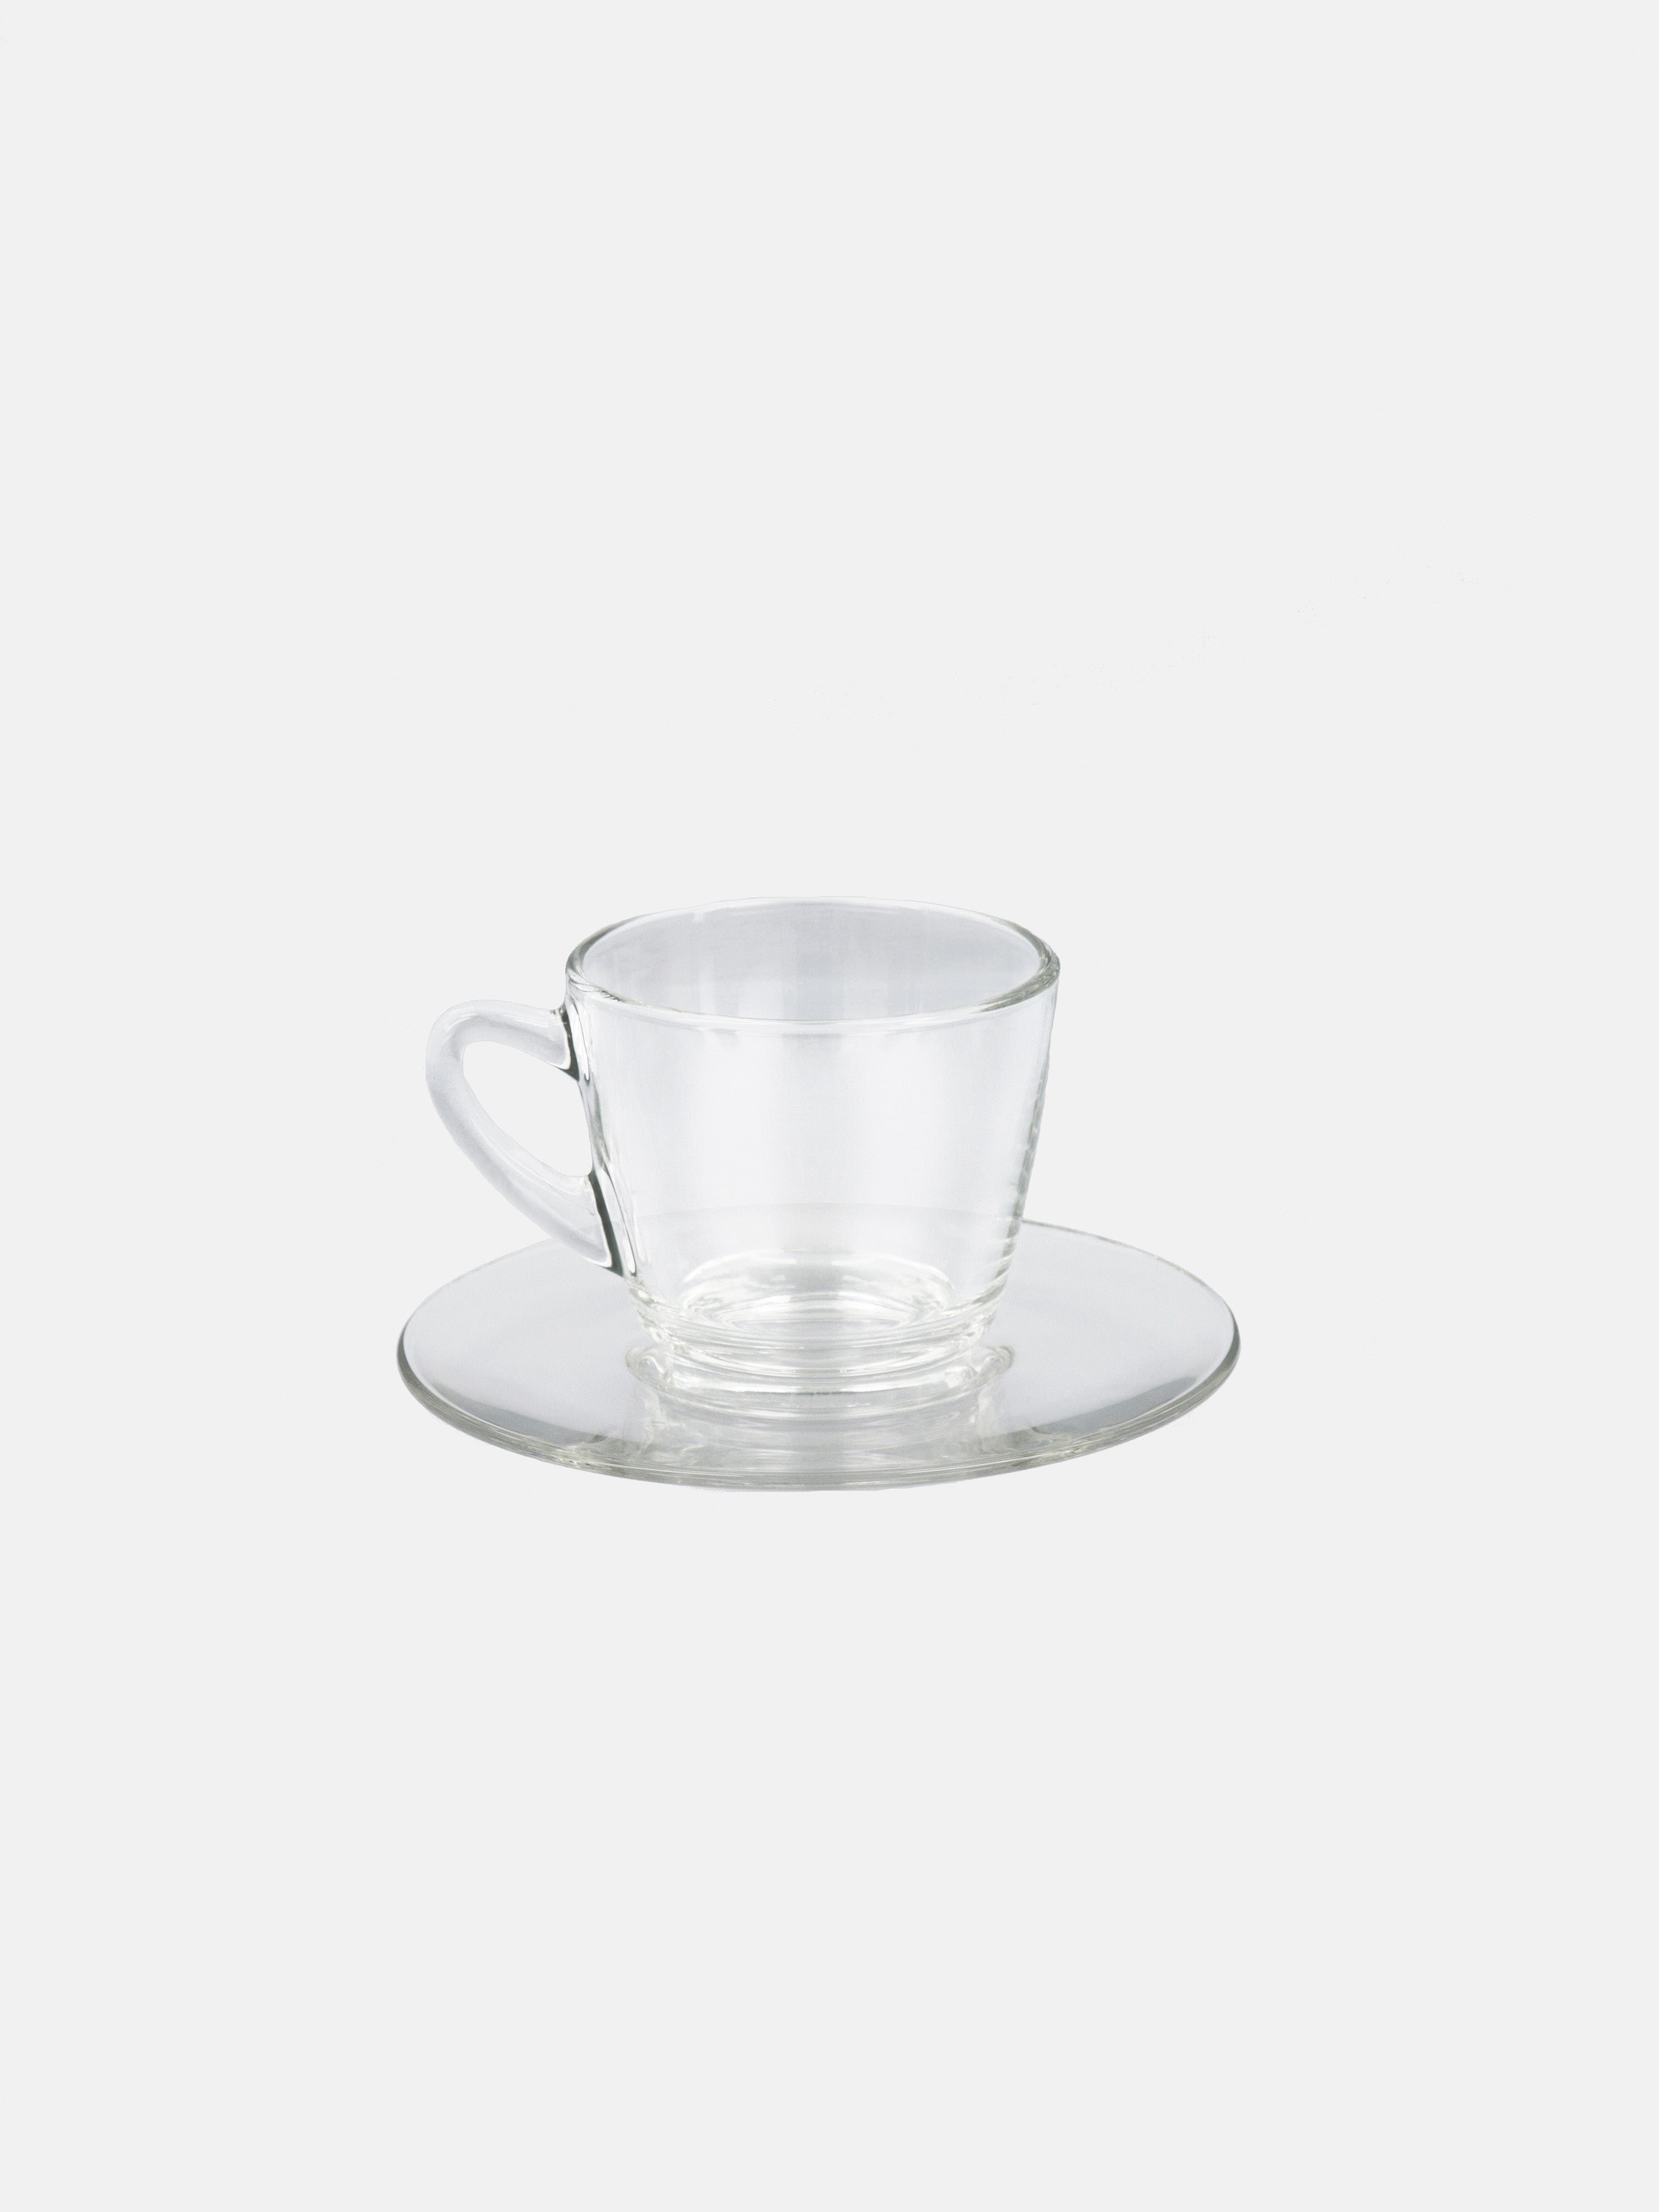 KENYA glass cup and saucer